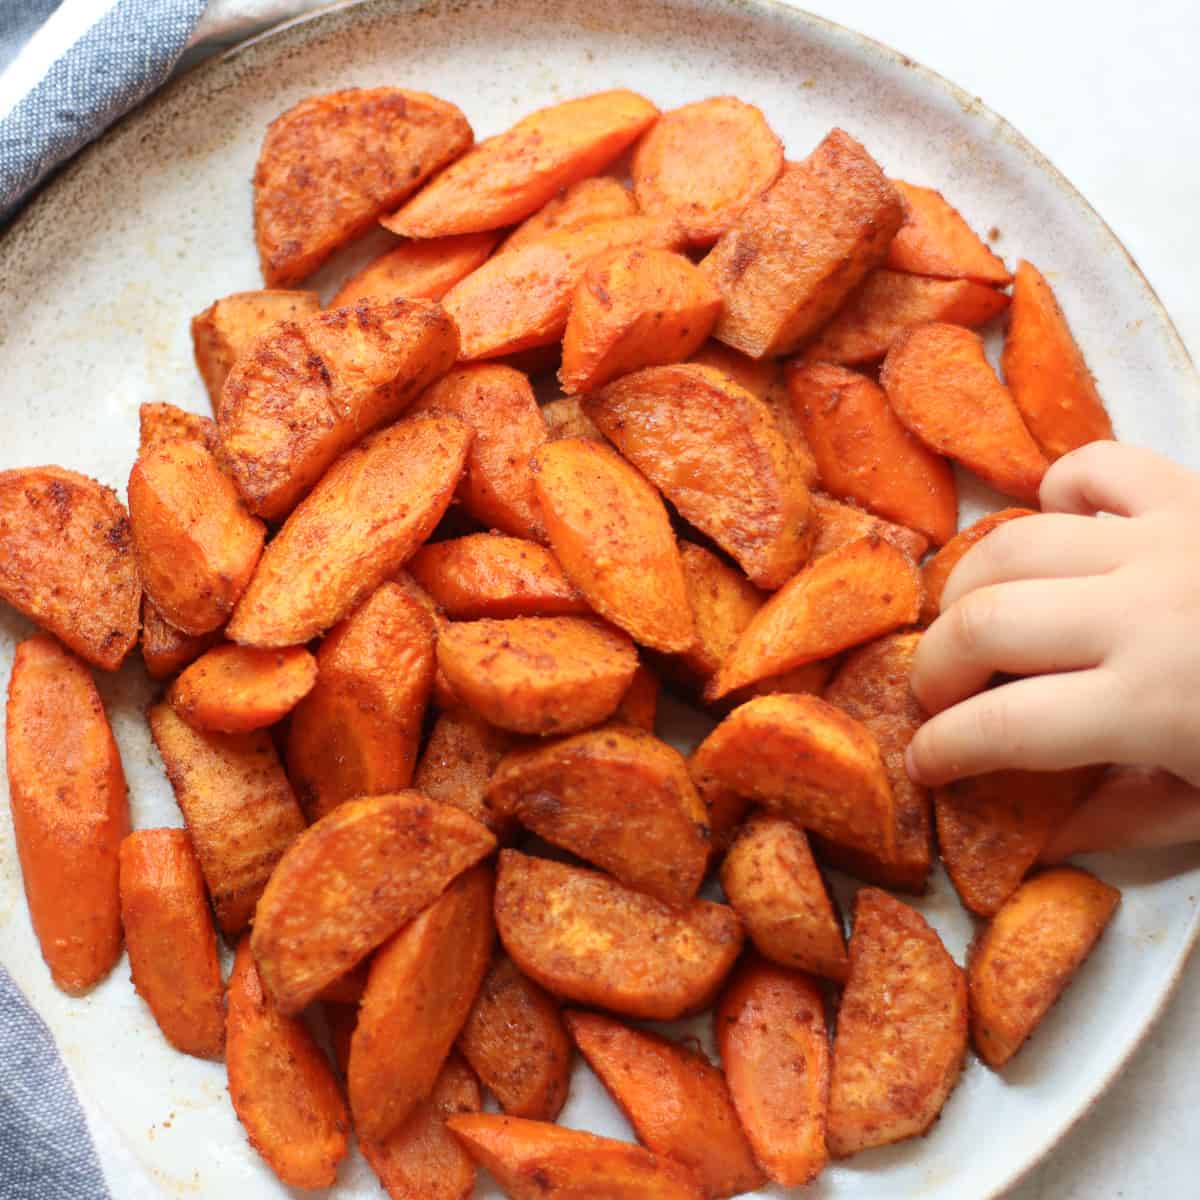 https://www.mjandhungryman.com/wp-content/uploads/2013/09/Roasted-sweet-potato-and-carrots.jpg